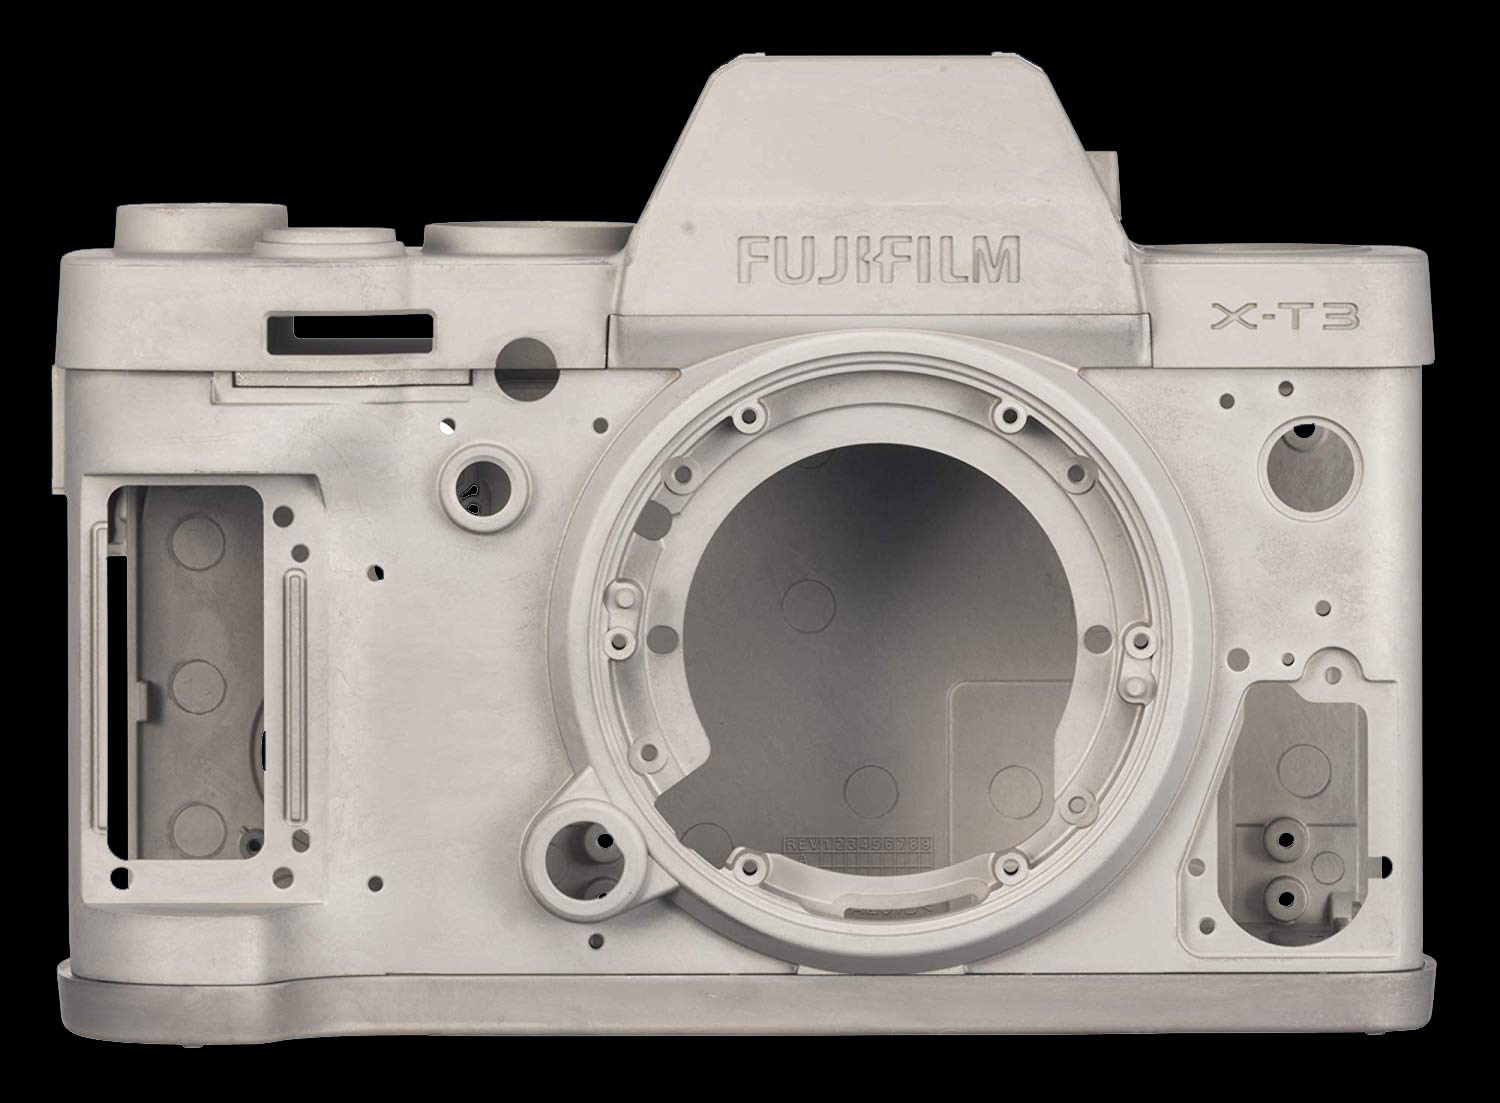 PHOTOGRAPHIC Worlds Camera Fujifilm XT3